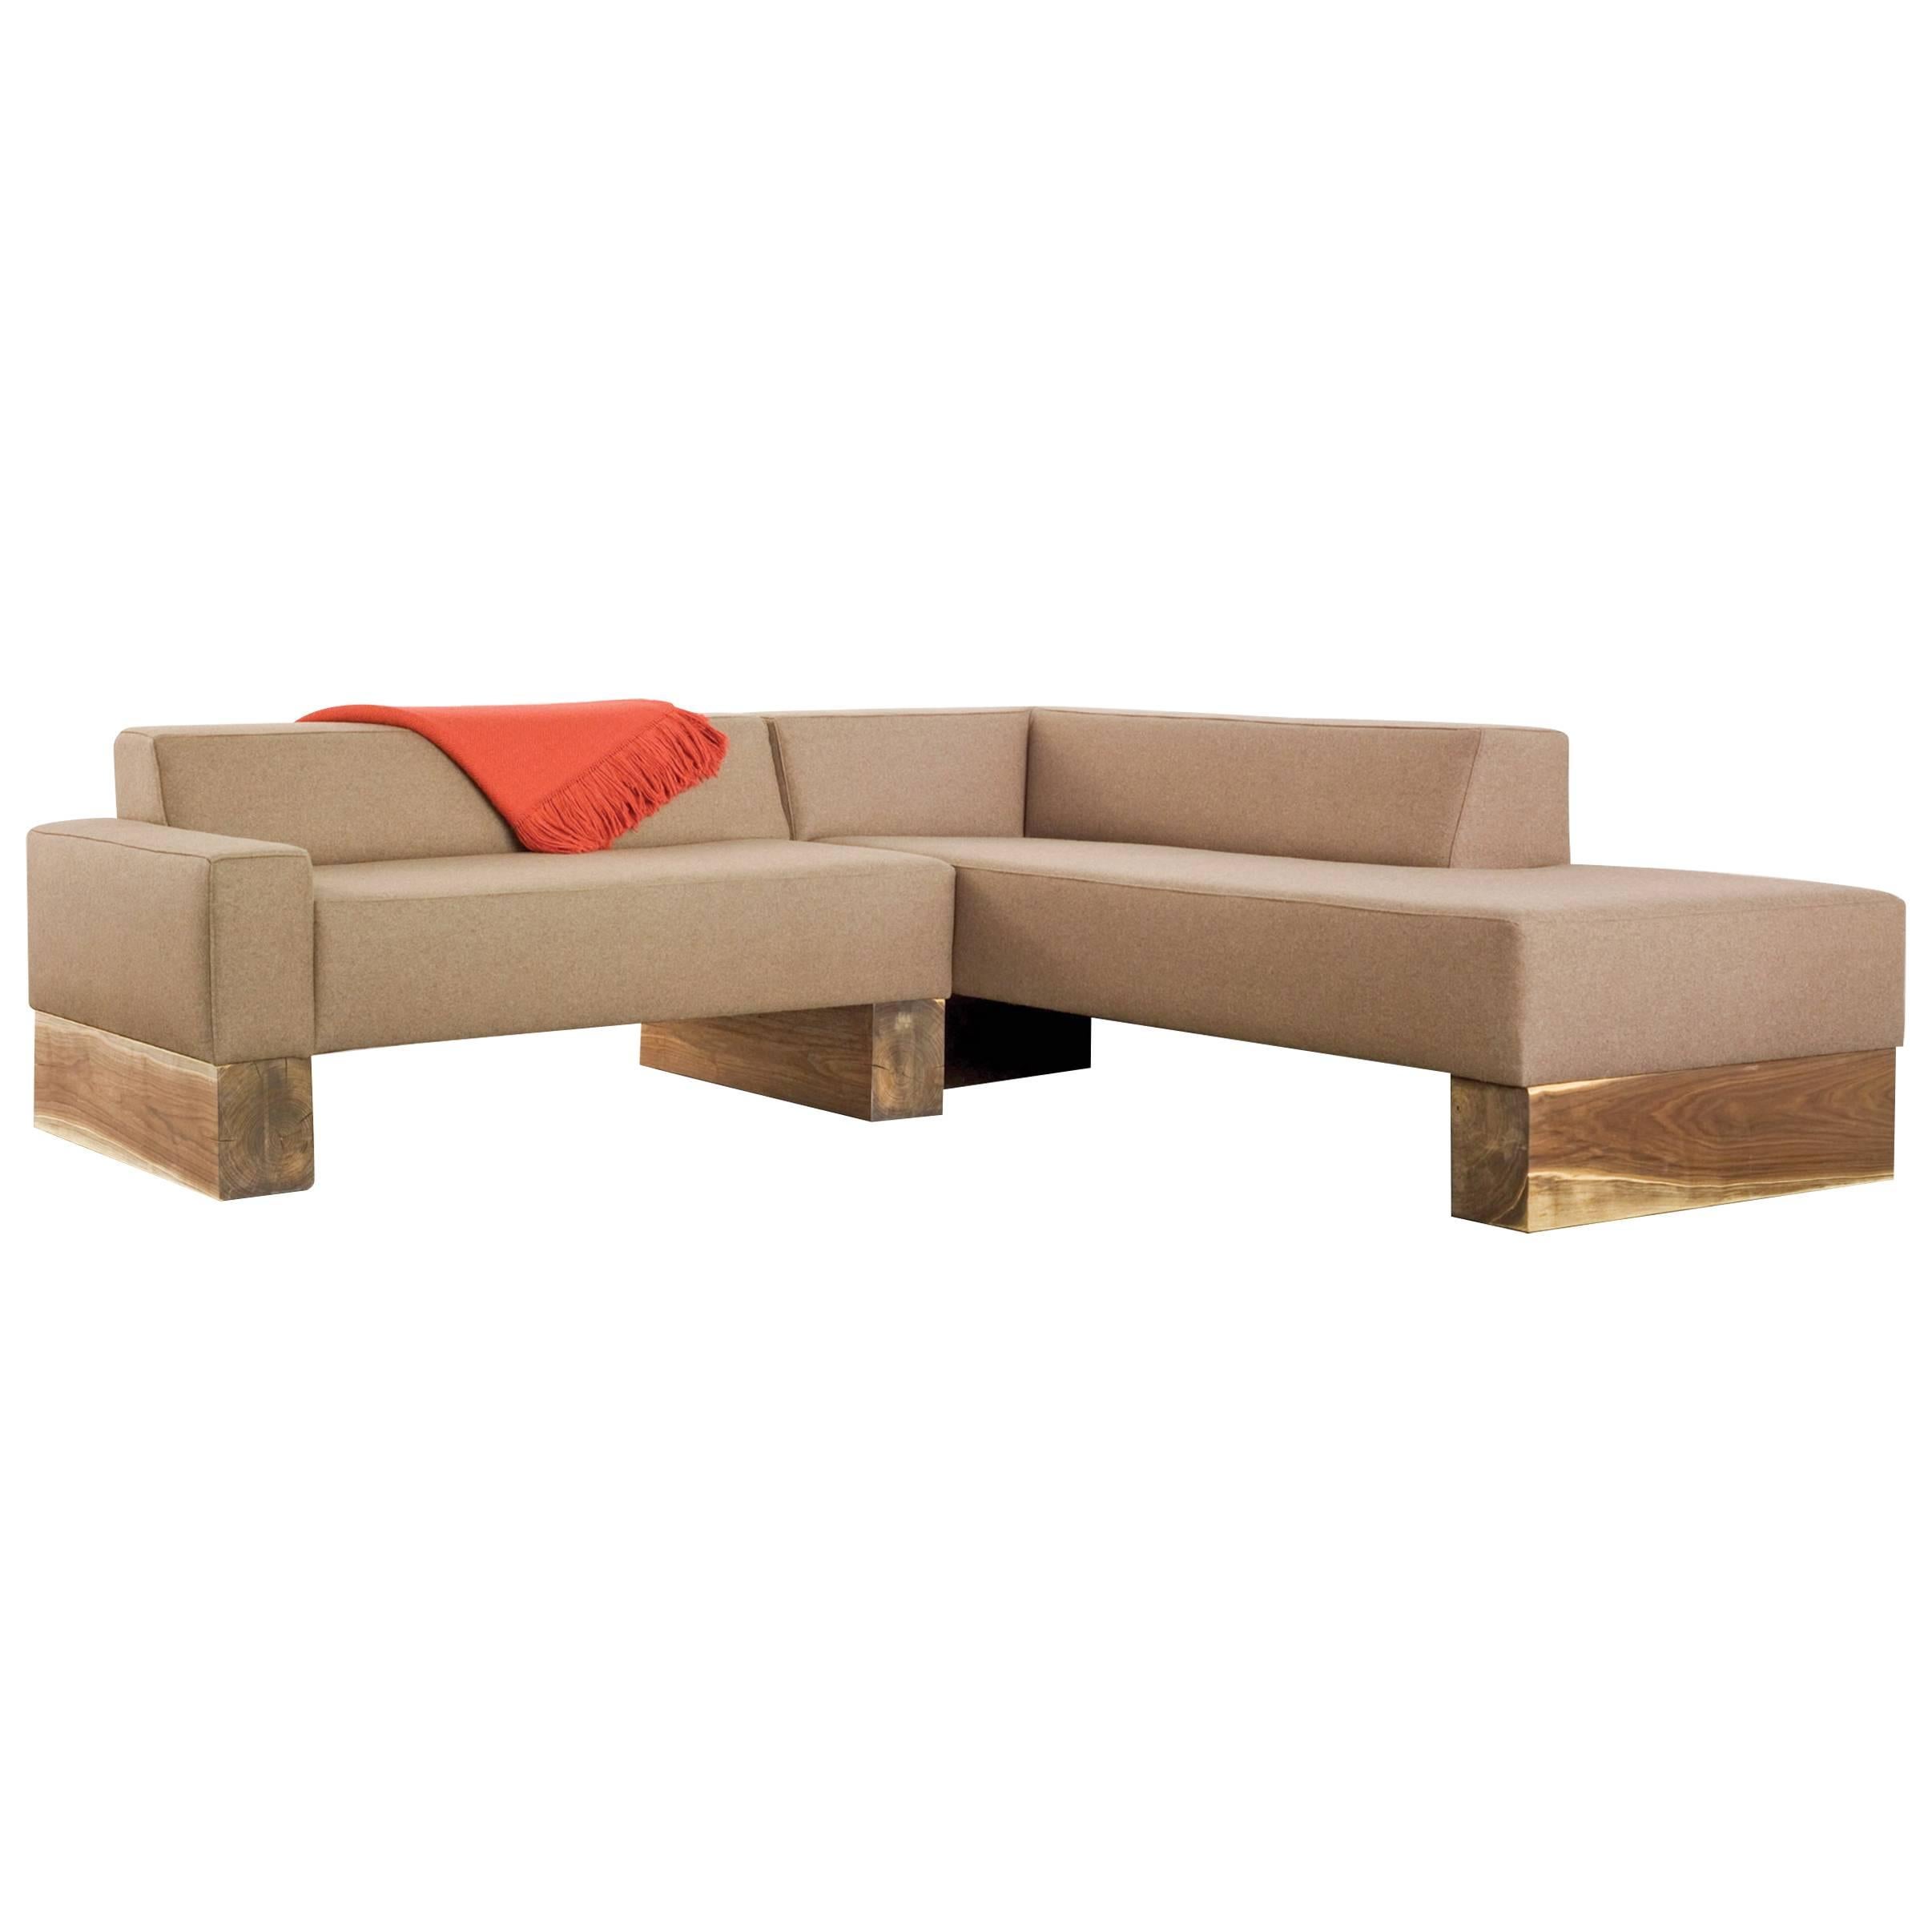 Shimna Beam Sectional Sofa For Sale